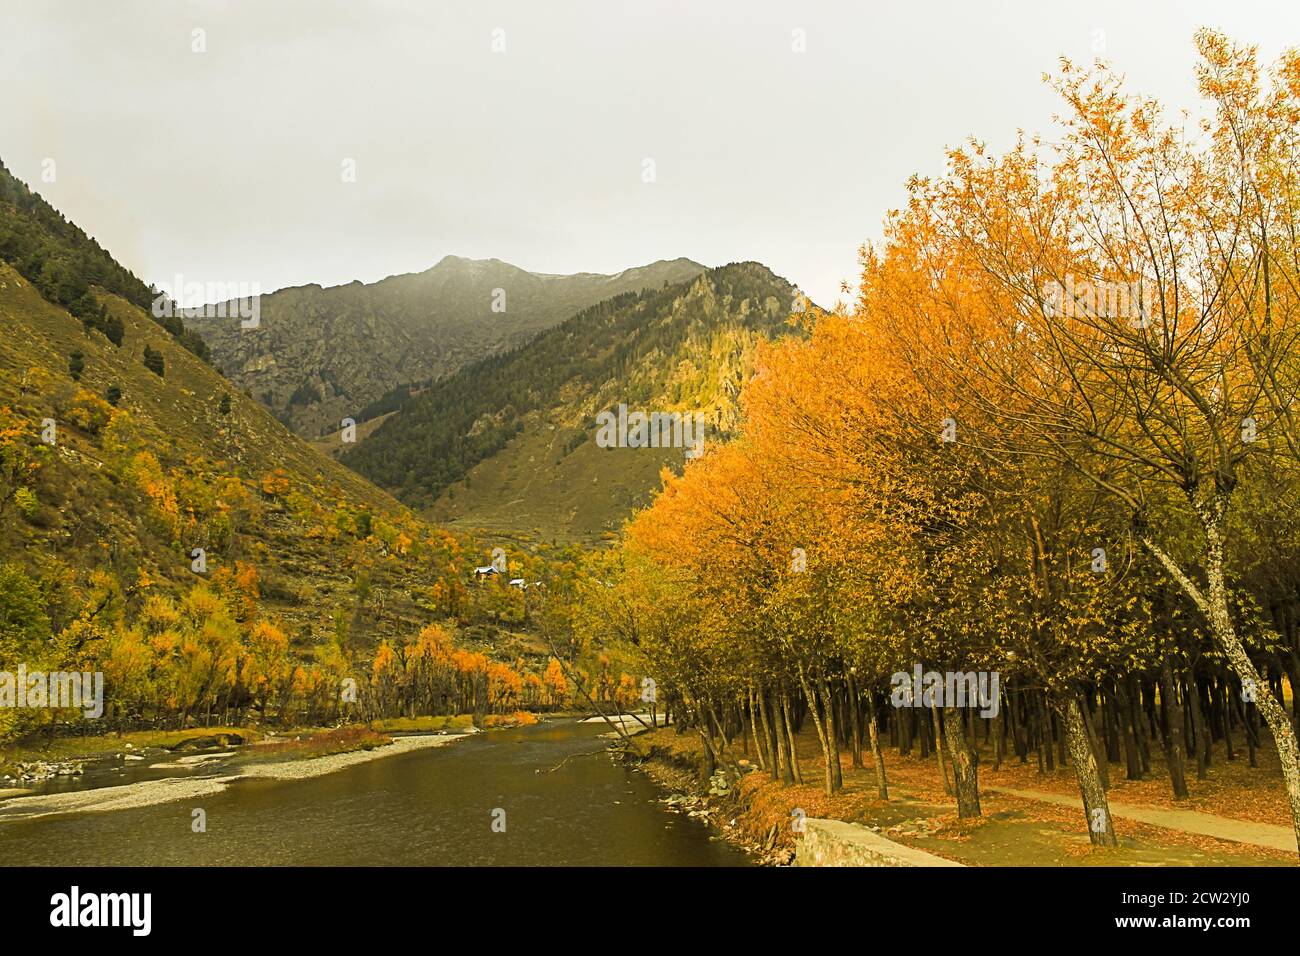 Mountains in Autumn season with water stream Stock Photo